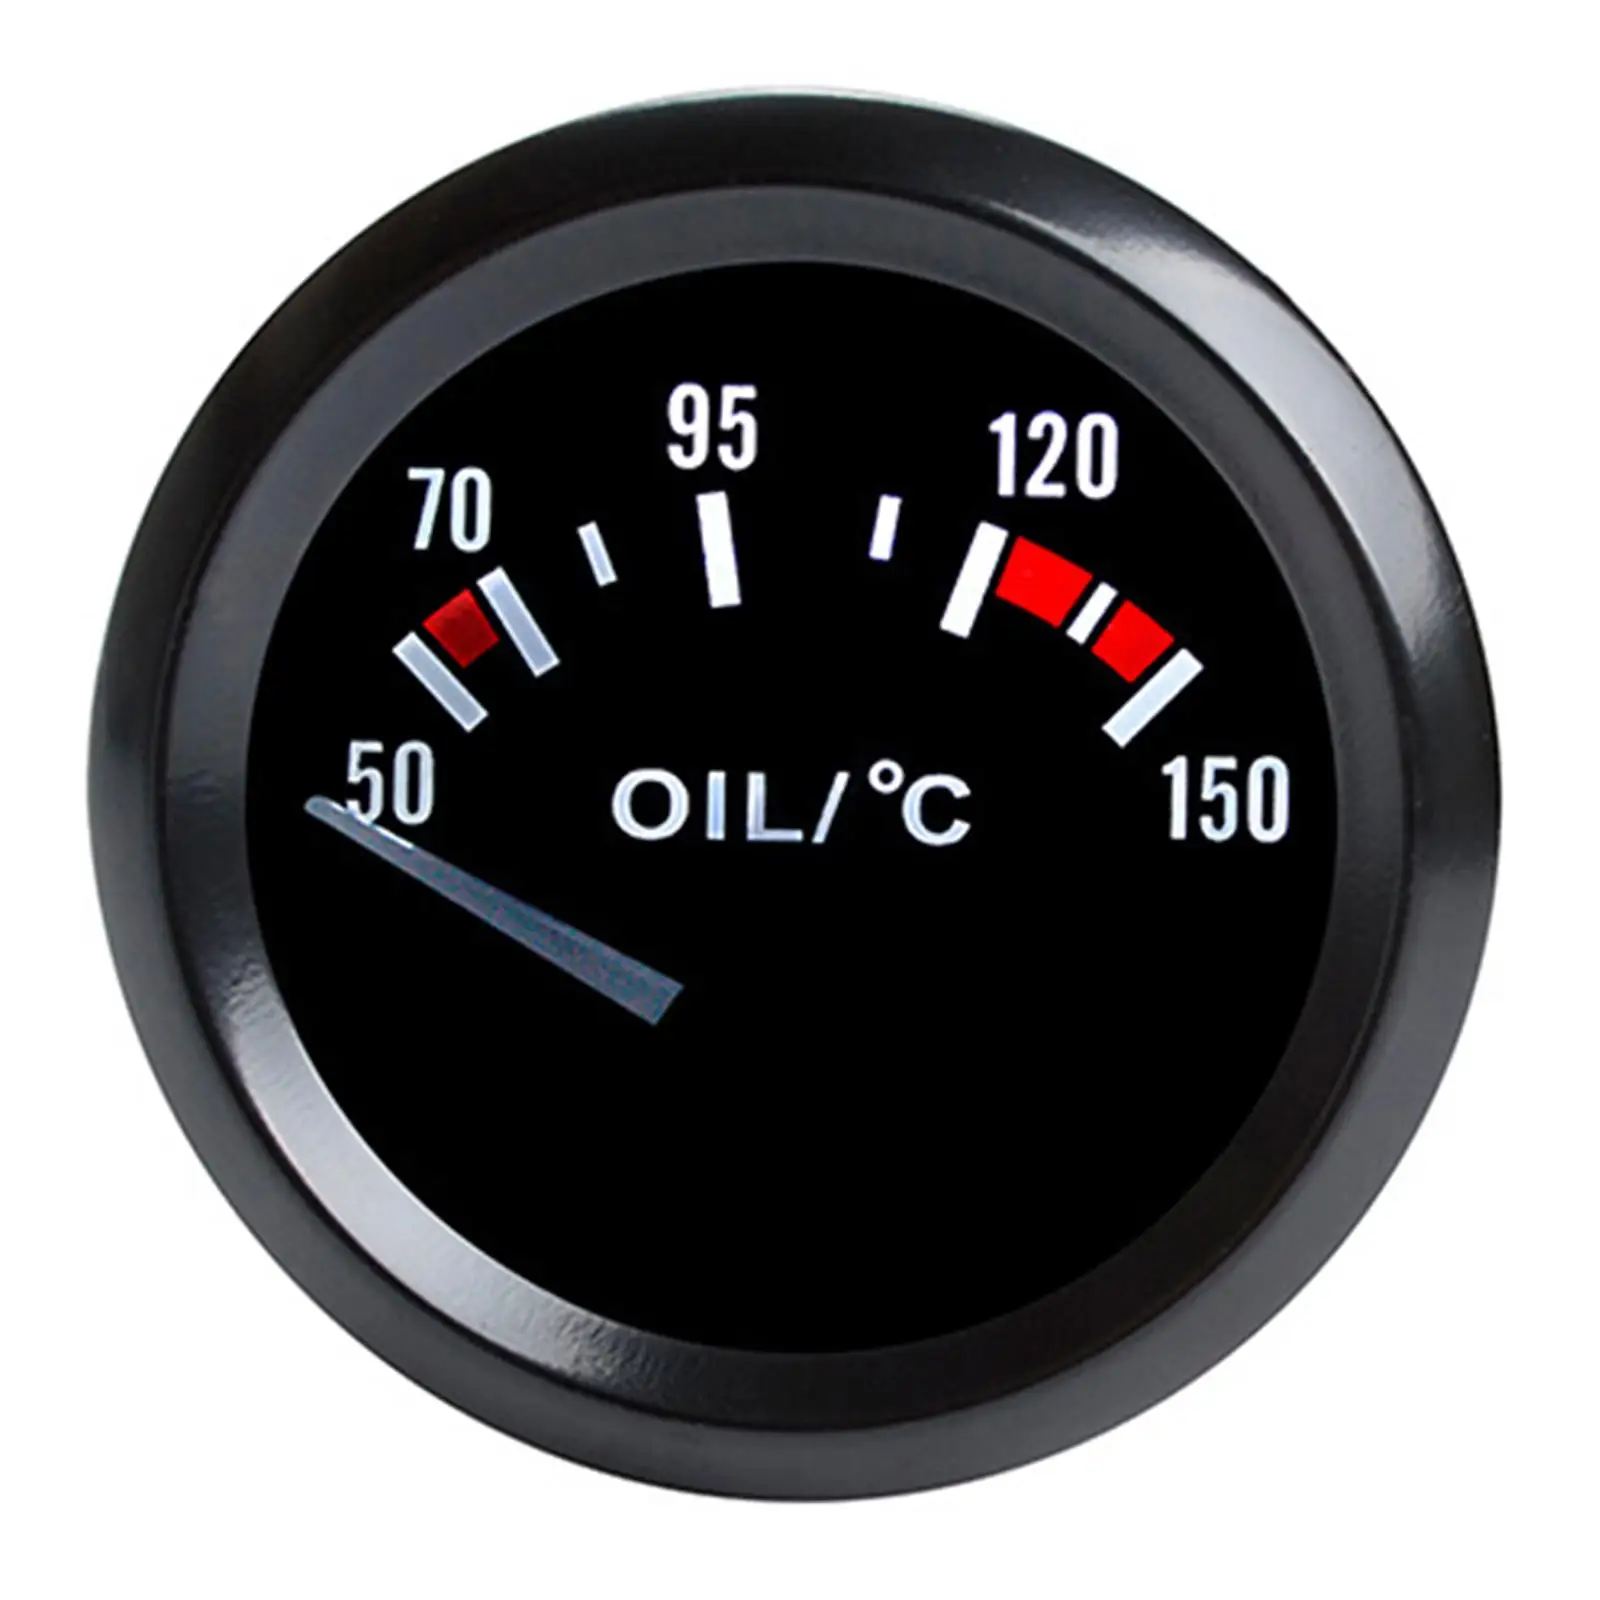 Oil Temp Gauge Universal Car Oil Temp Gauge Meter for Vehicle Car Truck